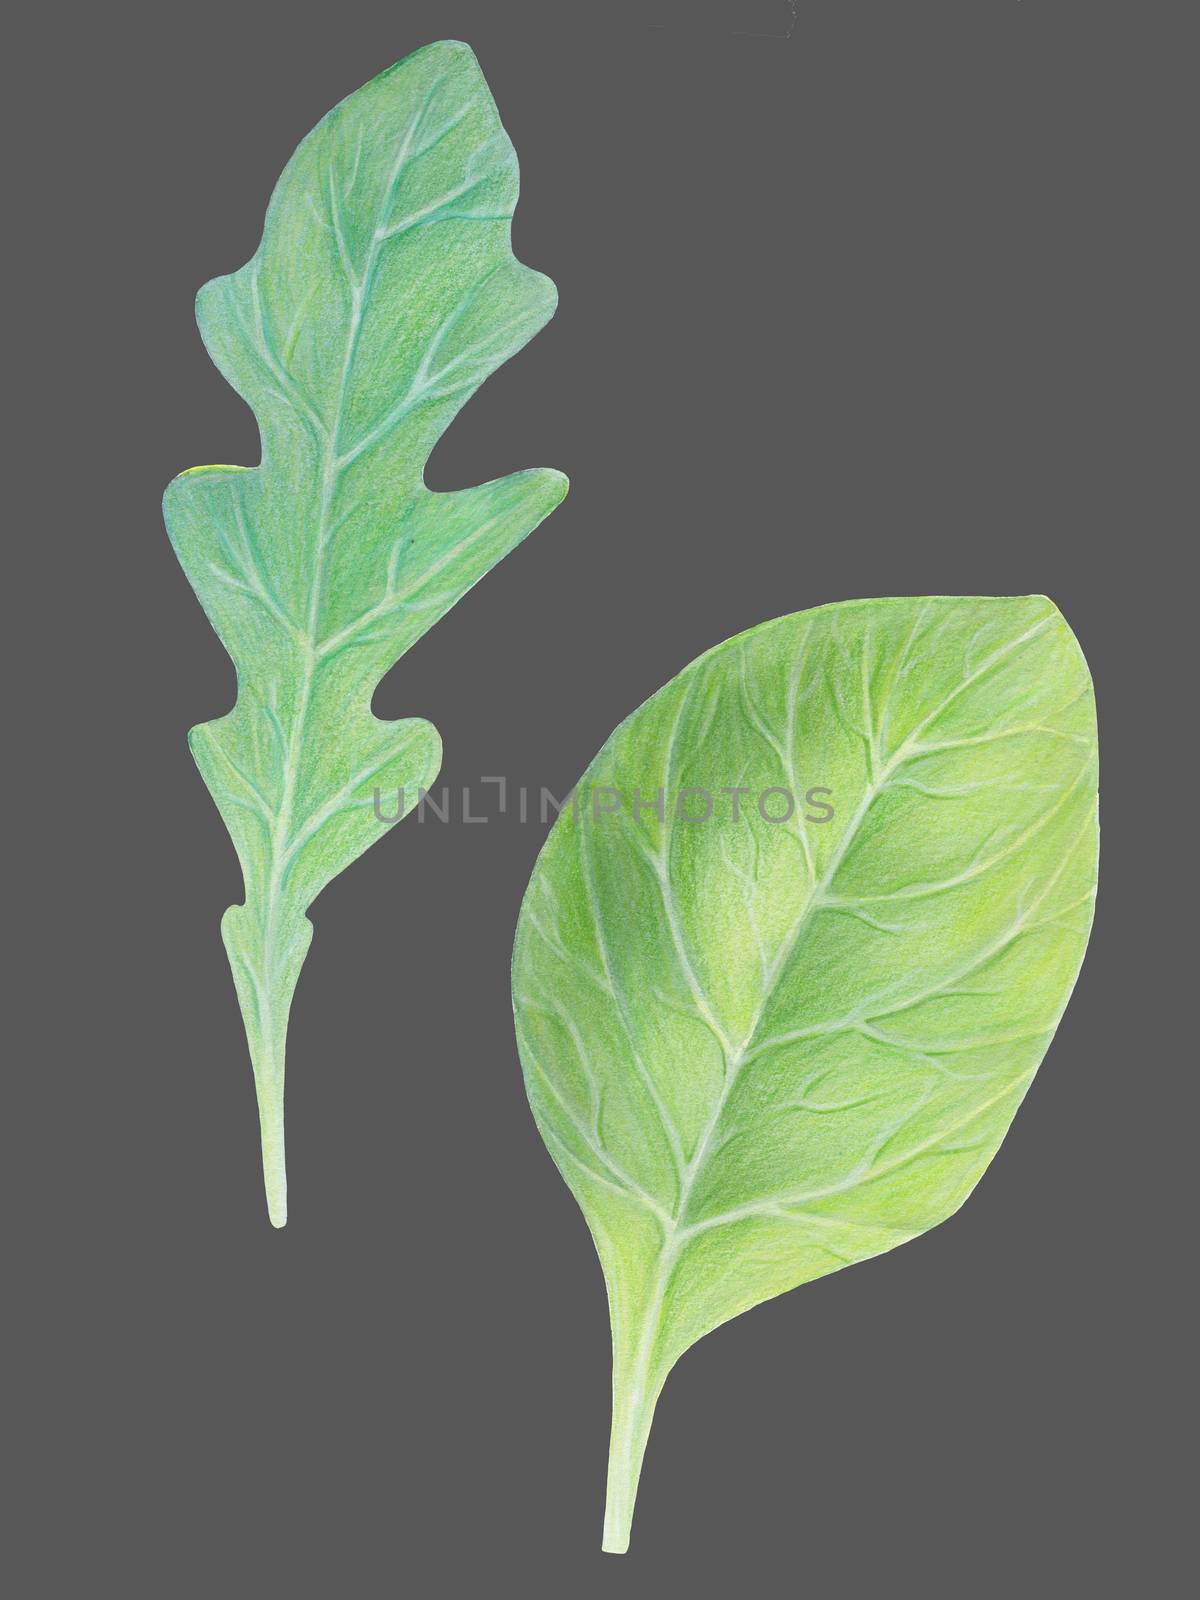 Arugula rucola (rocket salad) and spinach. Fresh green leaves isolated on dark background. Watercolor hand drawn illustration. Fresh herbs. Realistic botanical art. Vegetarian Ingredient. Organic food by sshisshka